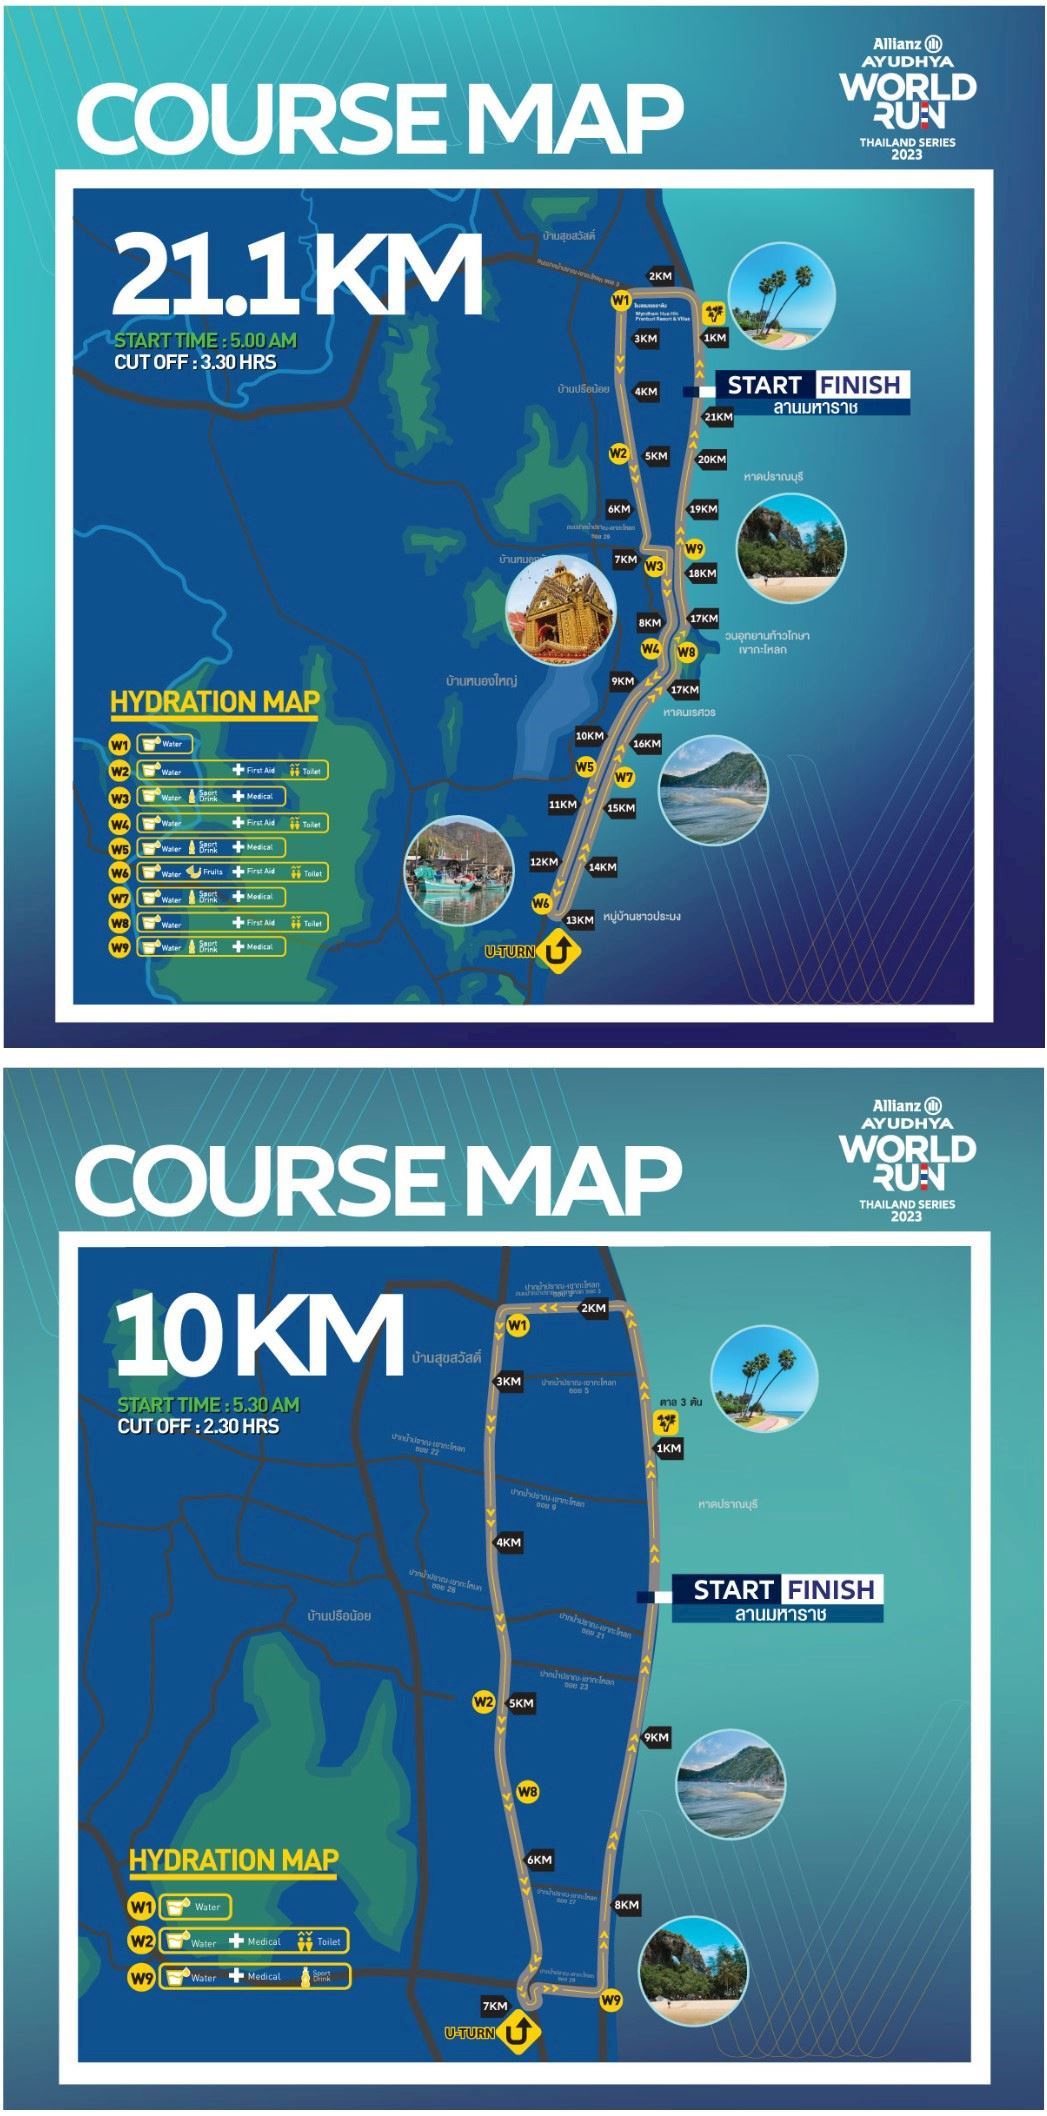 ALLIANZ AYUDHYA WORLD RUN THAILAND SERIES Route Map